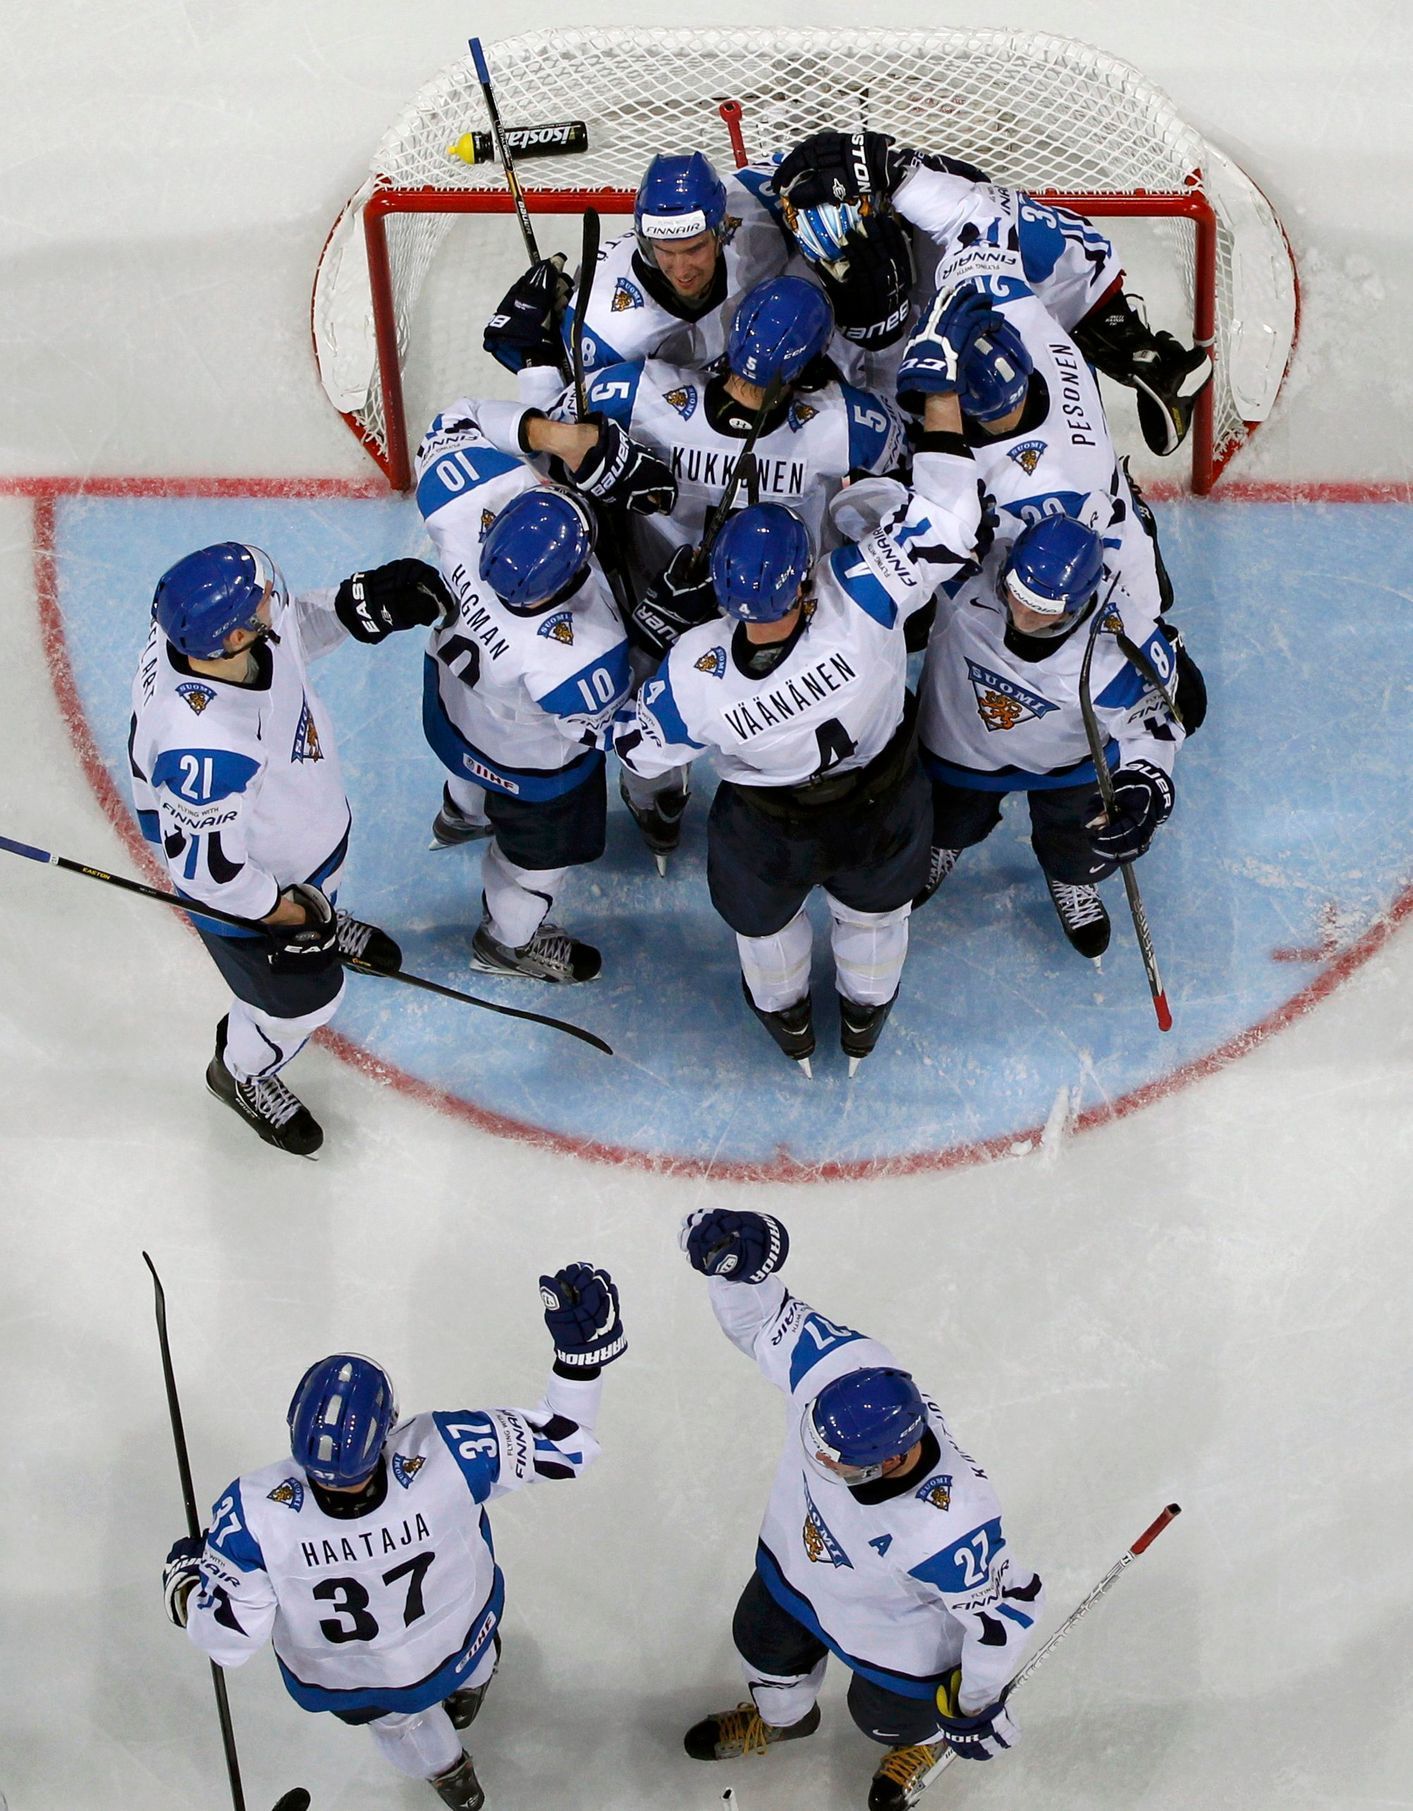 MS v hokeji 2013, Finsko - Slovensko: radost Finska